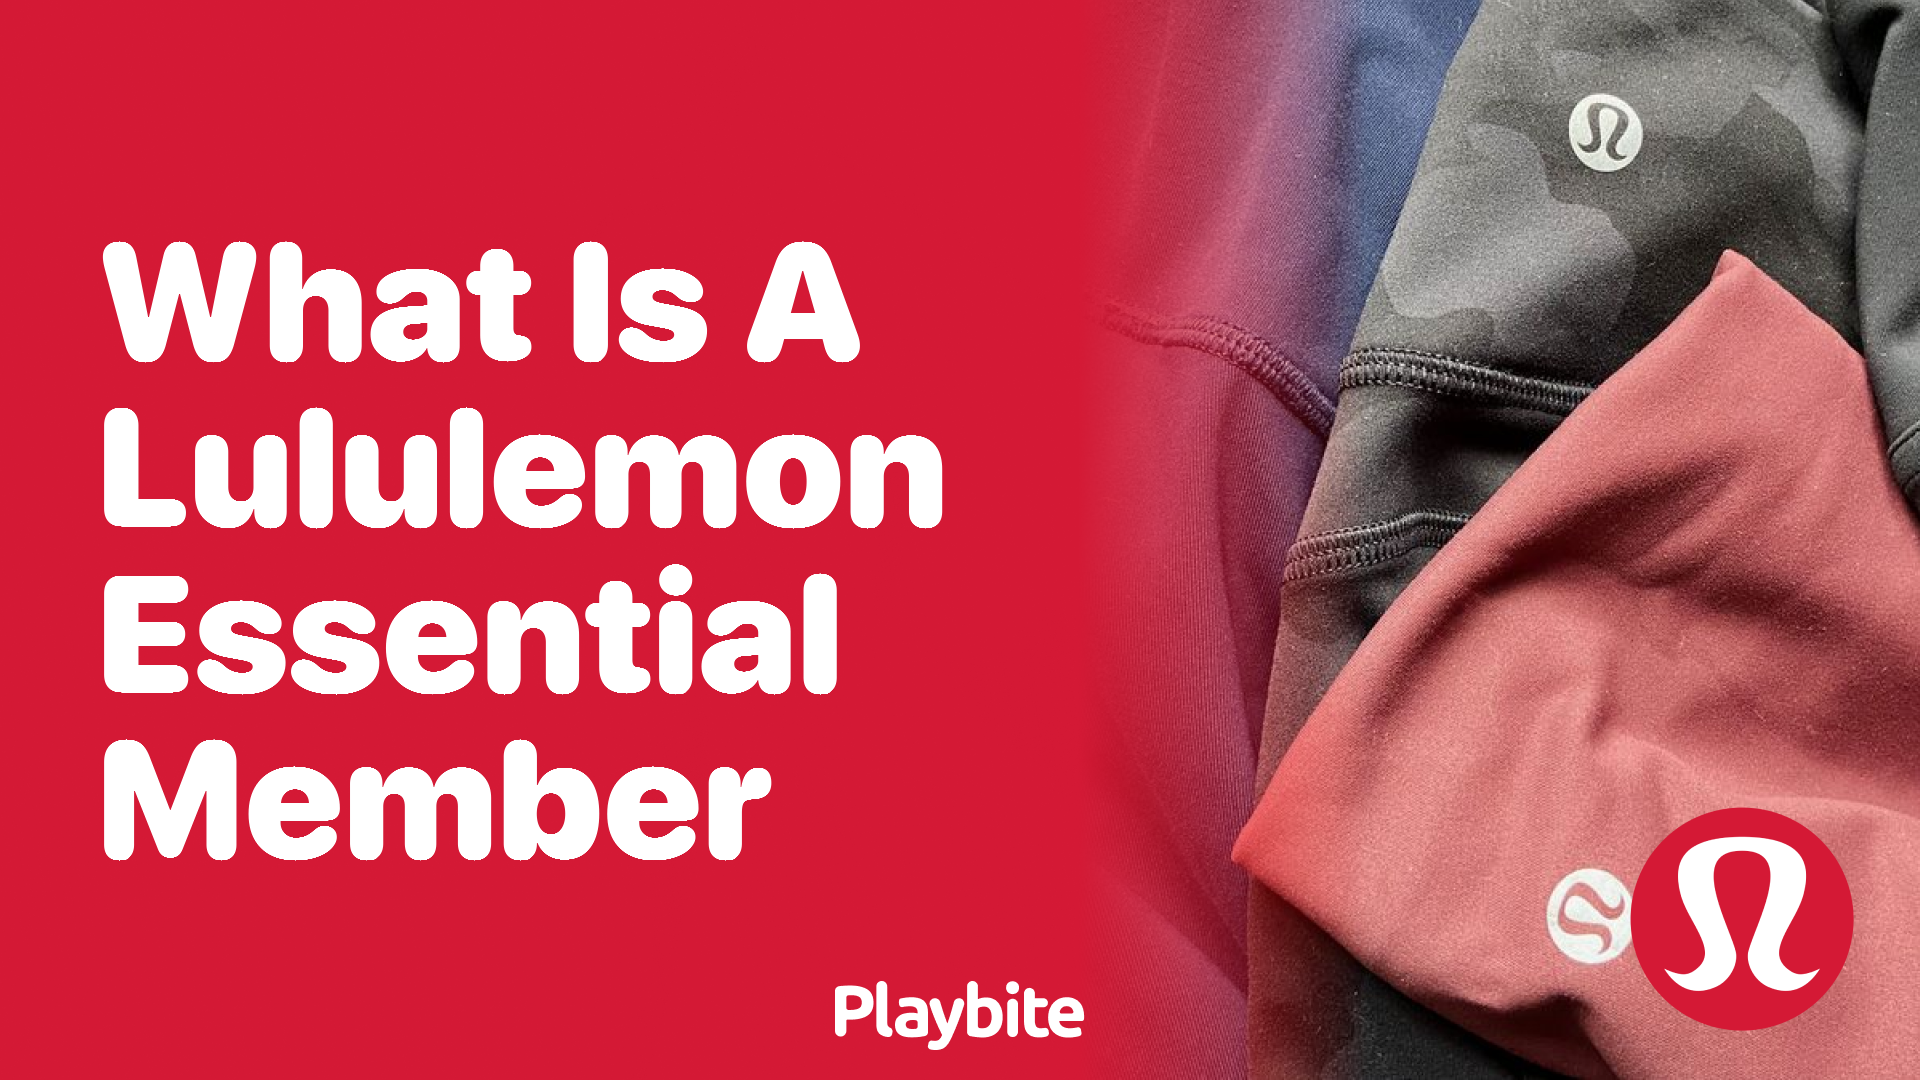 Are Wunder Under or Align Pants Better for Your Lululemon Wardrobe? -  Playbite